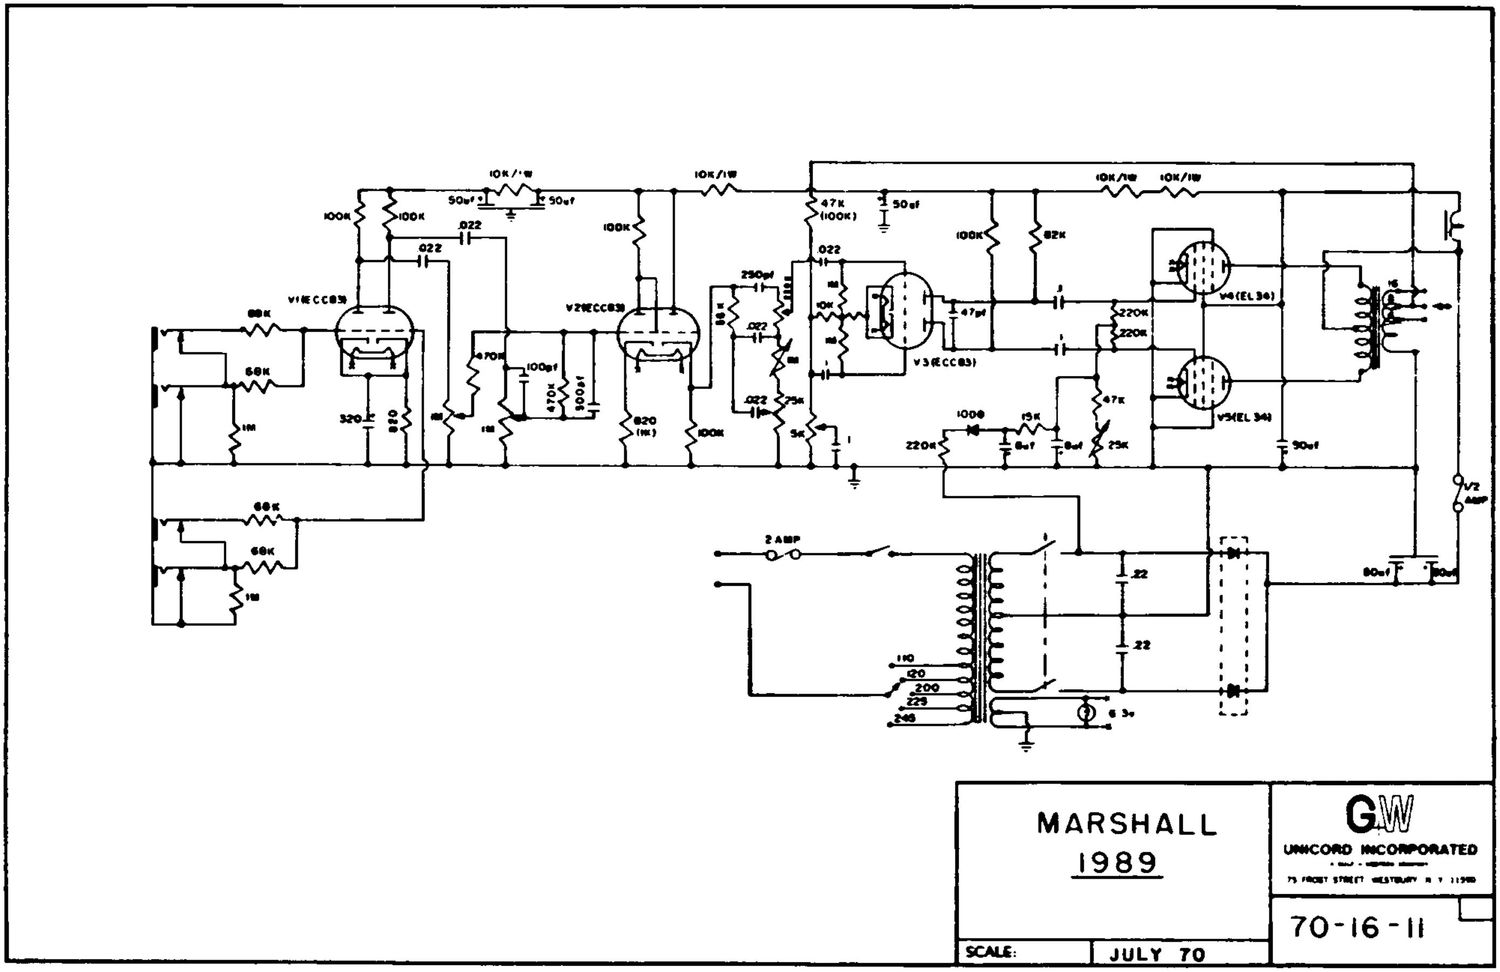 Marshall 1989 50W Organ Schematic